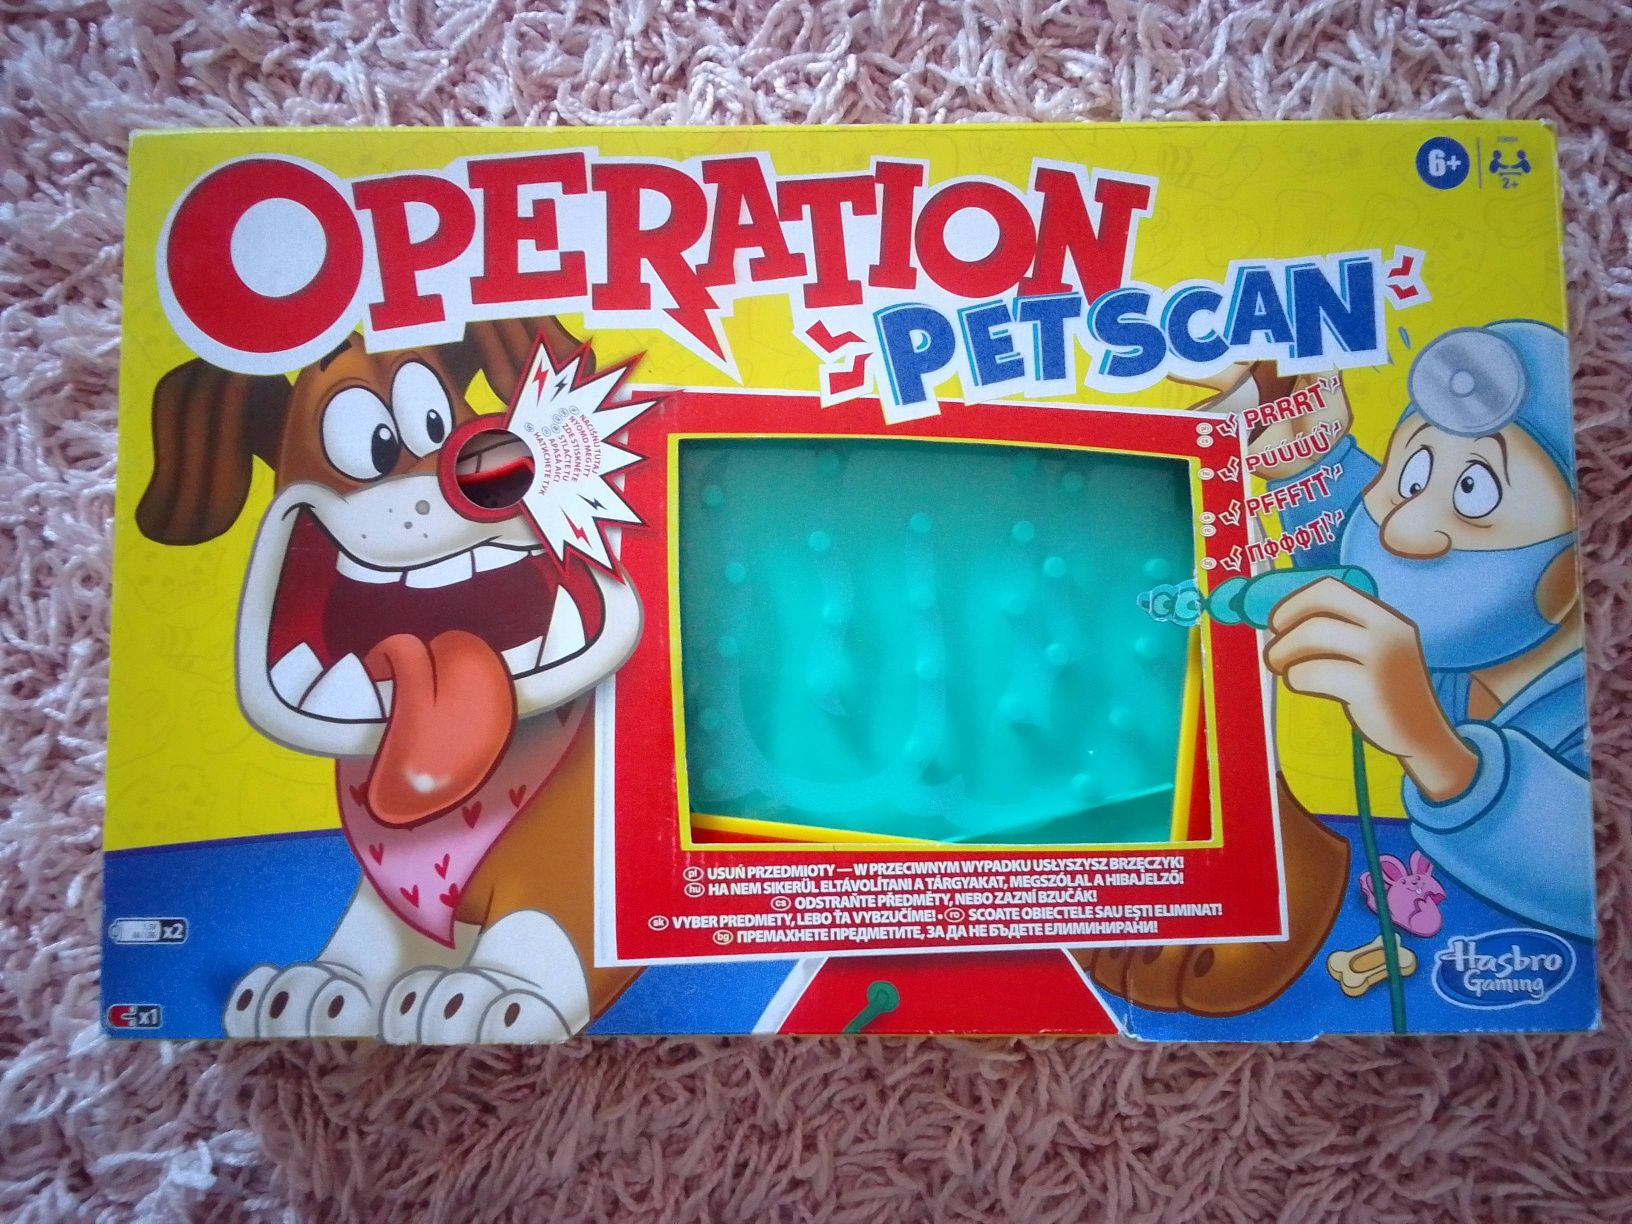 Gra zręcznościowa operacja pies, Hasbro, Operation Pet Scan